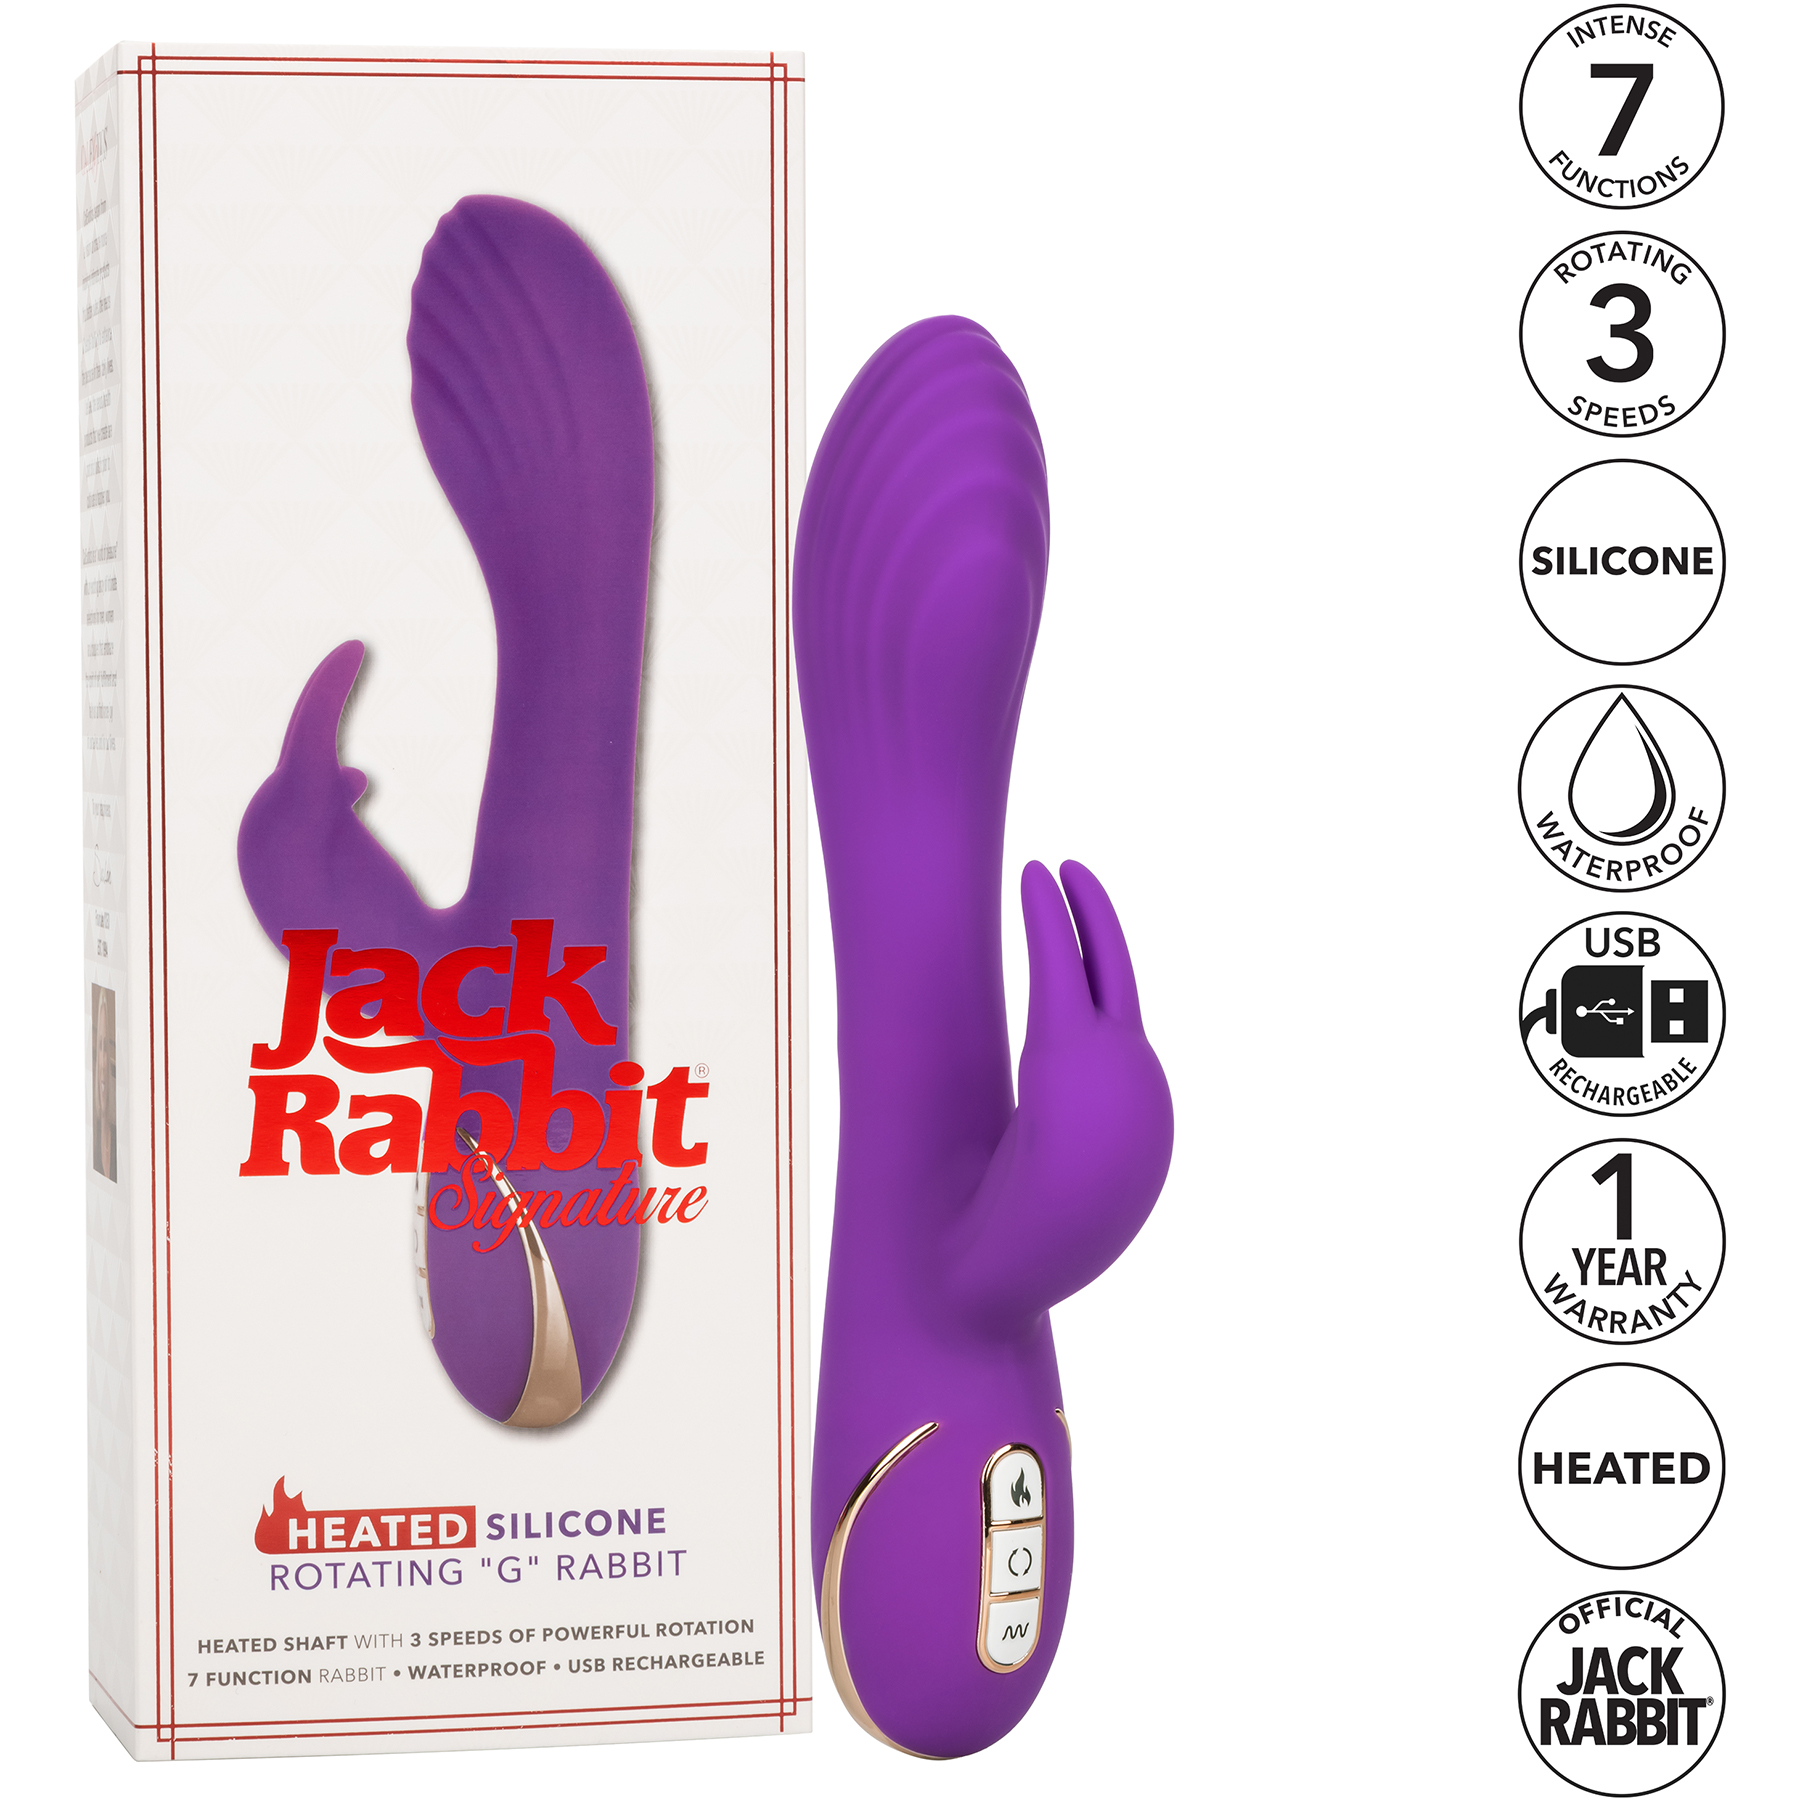 Jack Rabbit Signature Silicone Rabbit Rechargeable Vibrator - Features